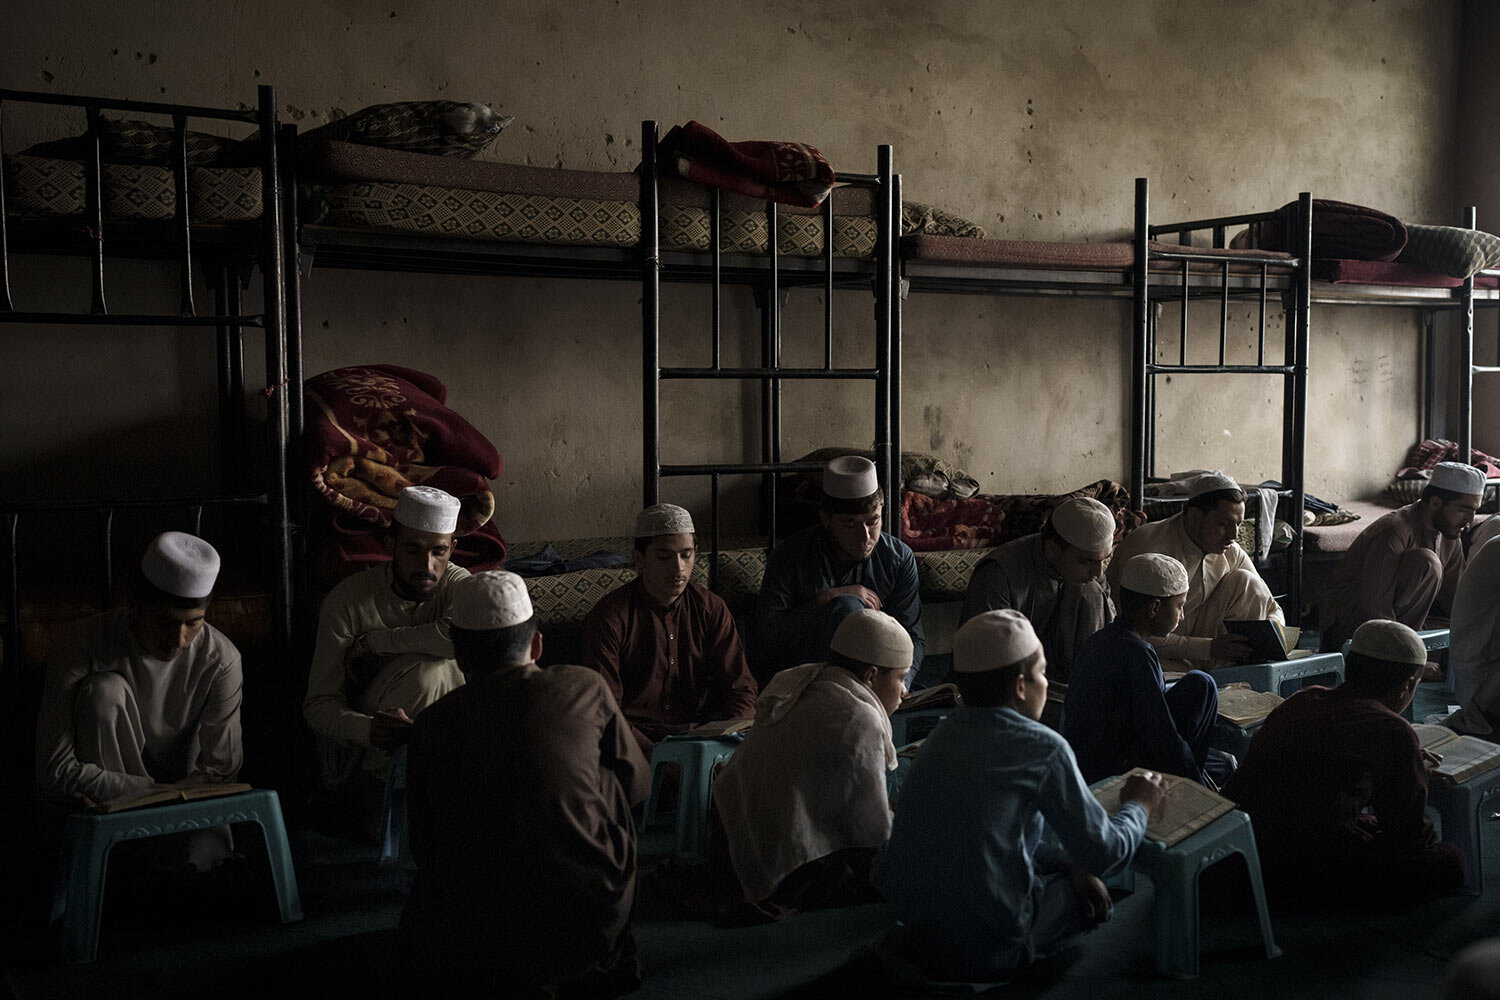 Afghan boys read the Quran, Islam's holy book, during class at the Khatamul Anbiya madrasa in Kabul, Afghanistan, Wednesday, Sept. 29, 2021. (AP Photo/Felipe Dana)